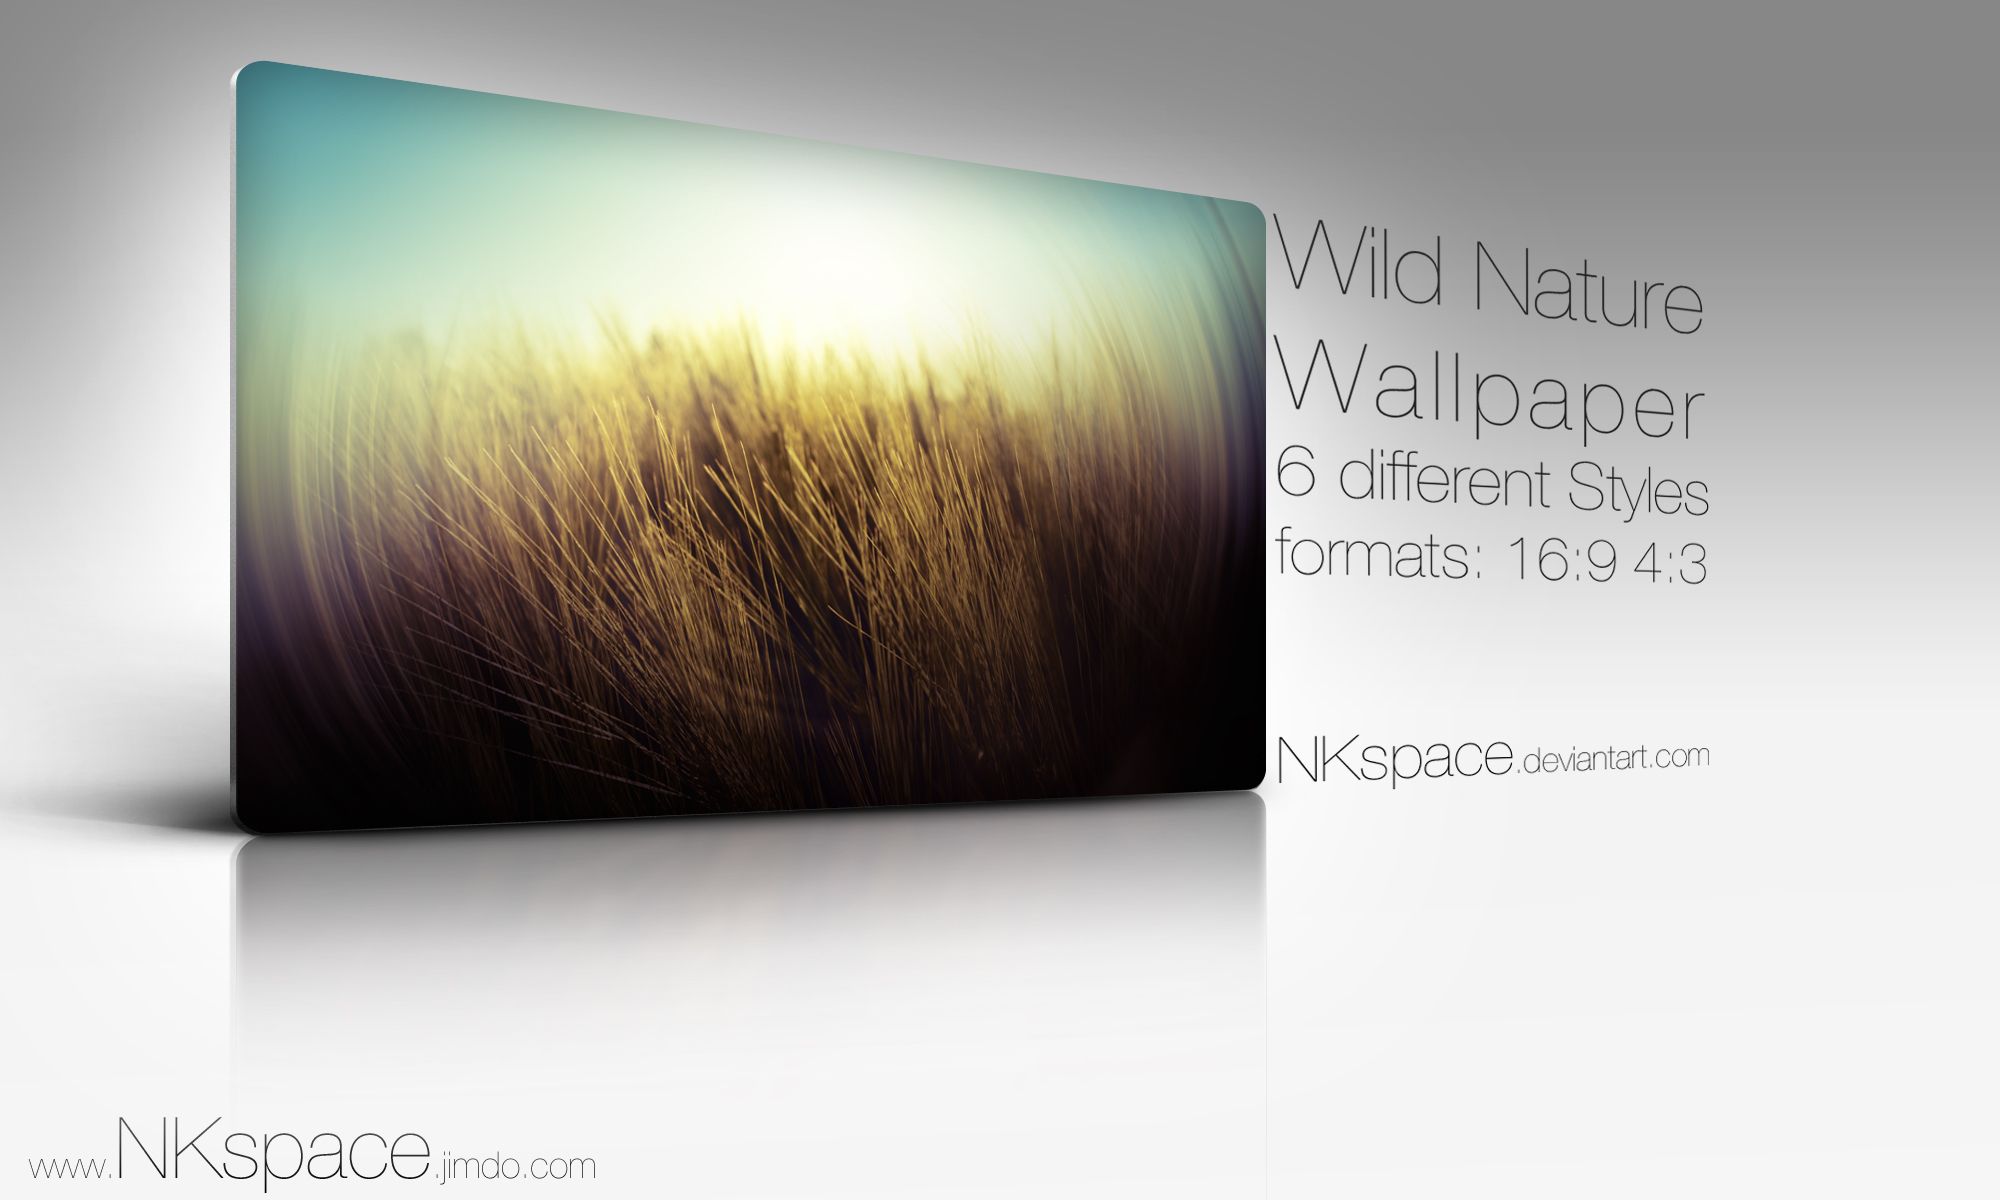 Wild Nature Wallpaper by NKspace on DeviantArt